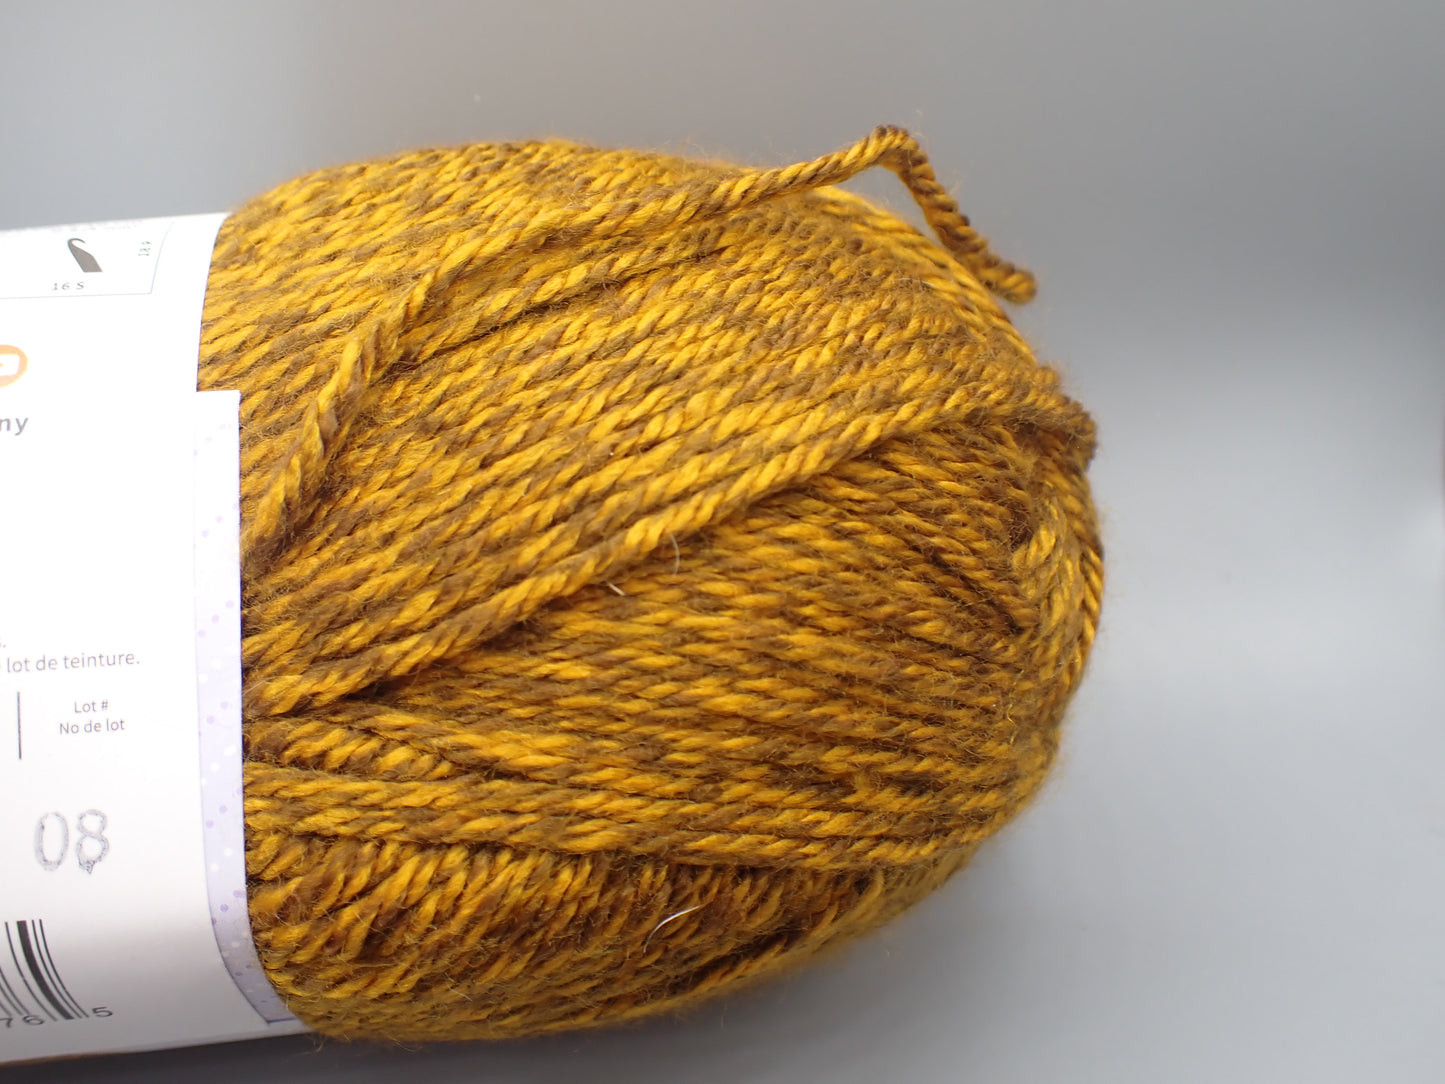 Lion Brand Yarn, Basic Stitch Anti Pilling Yarn, Iron Grey